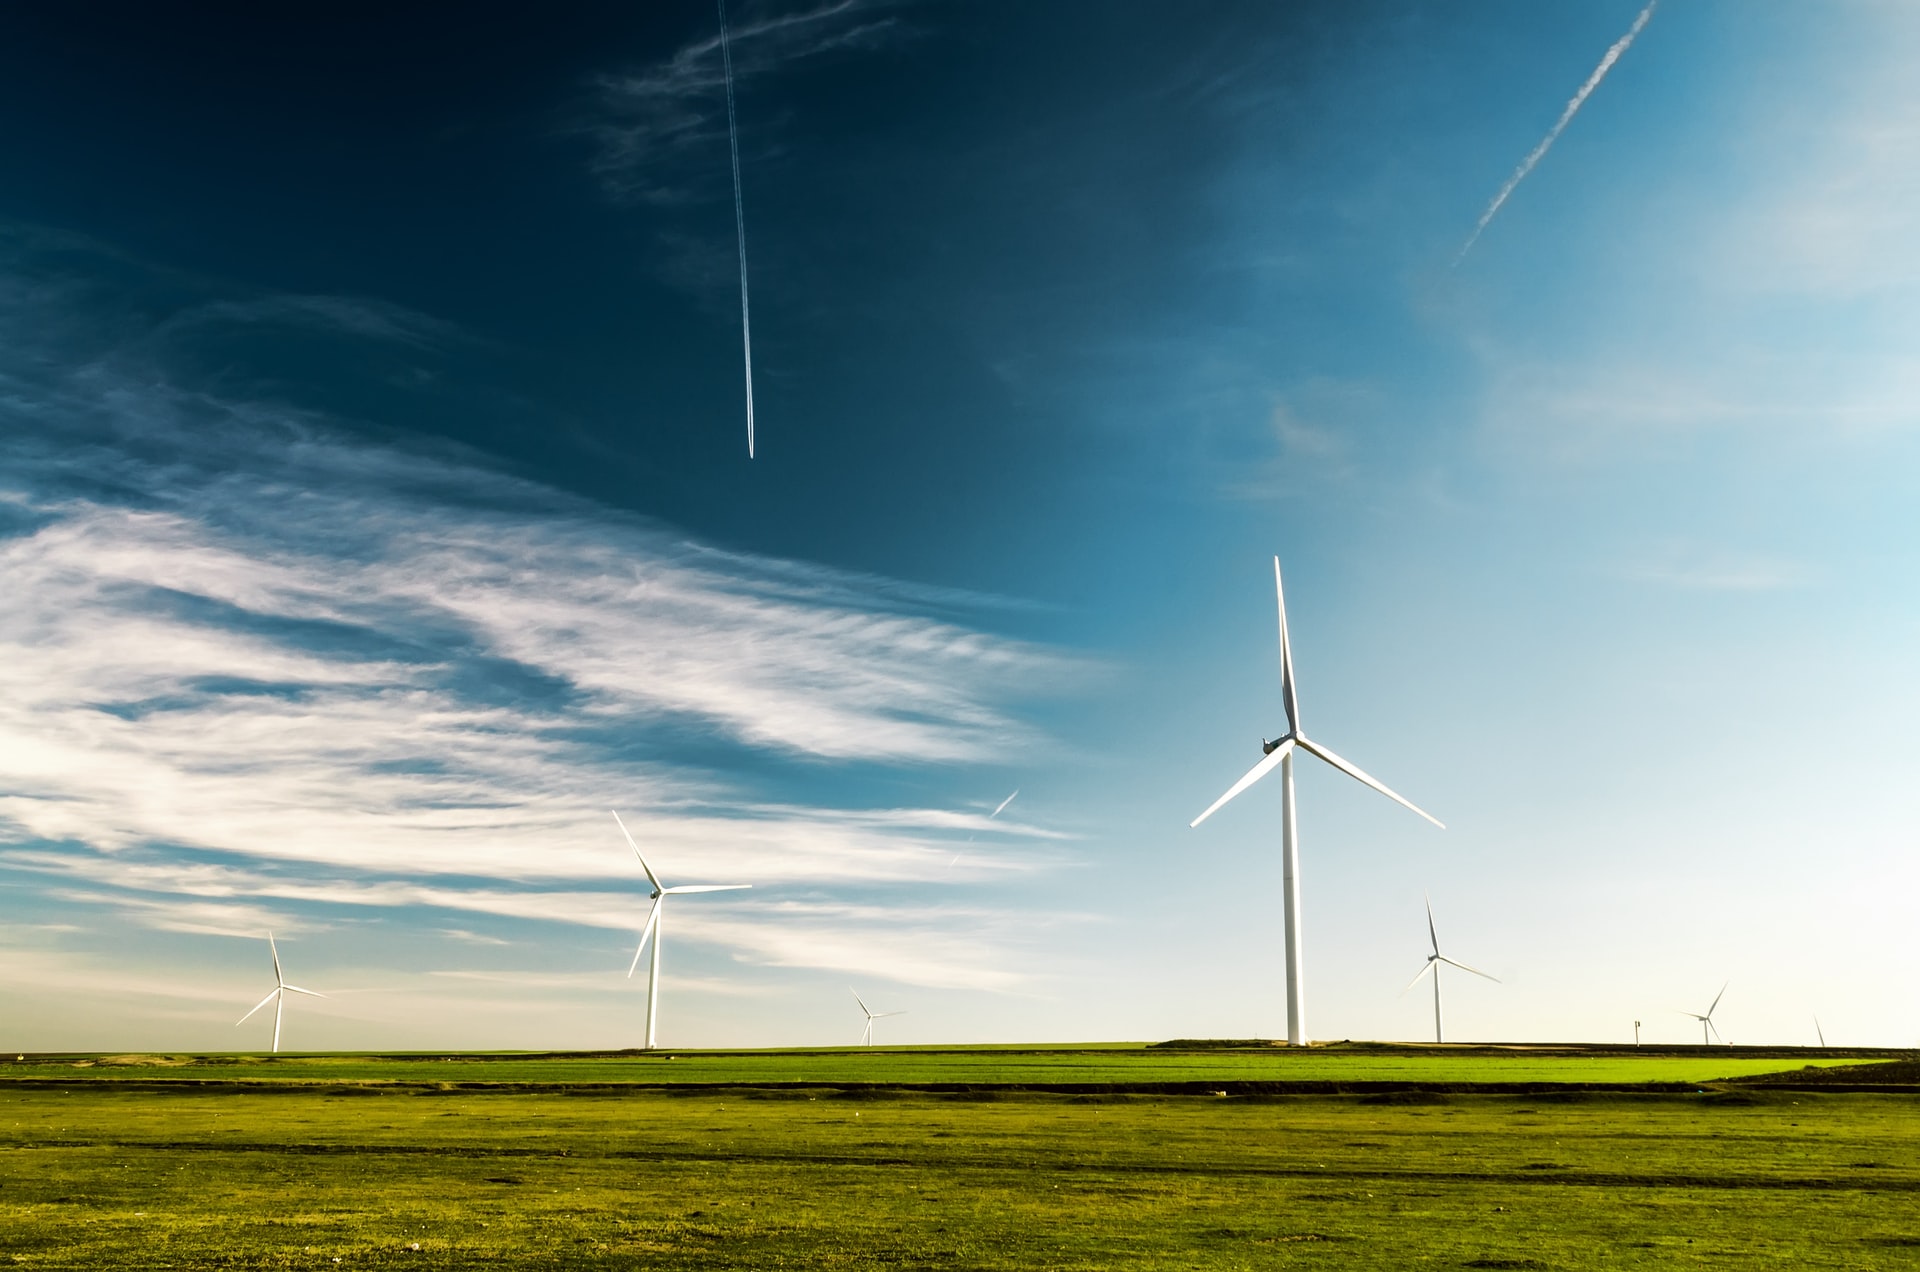 turbines generating wind energy